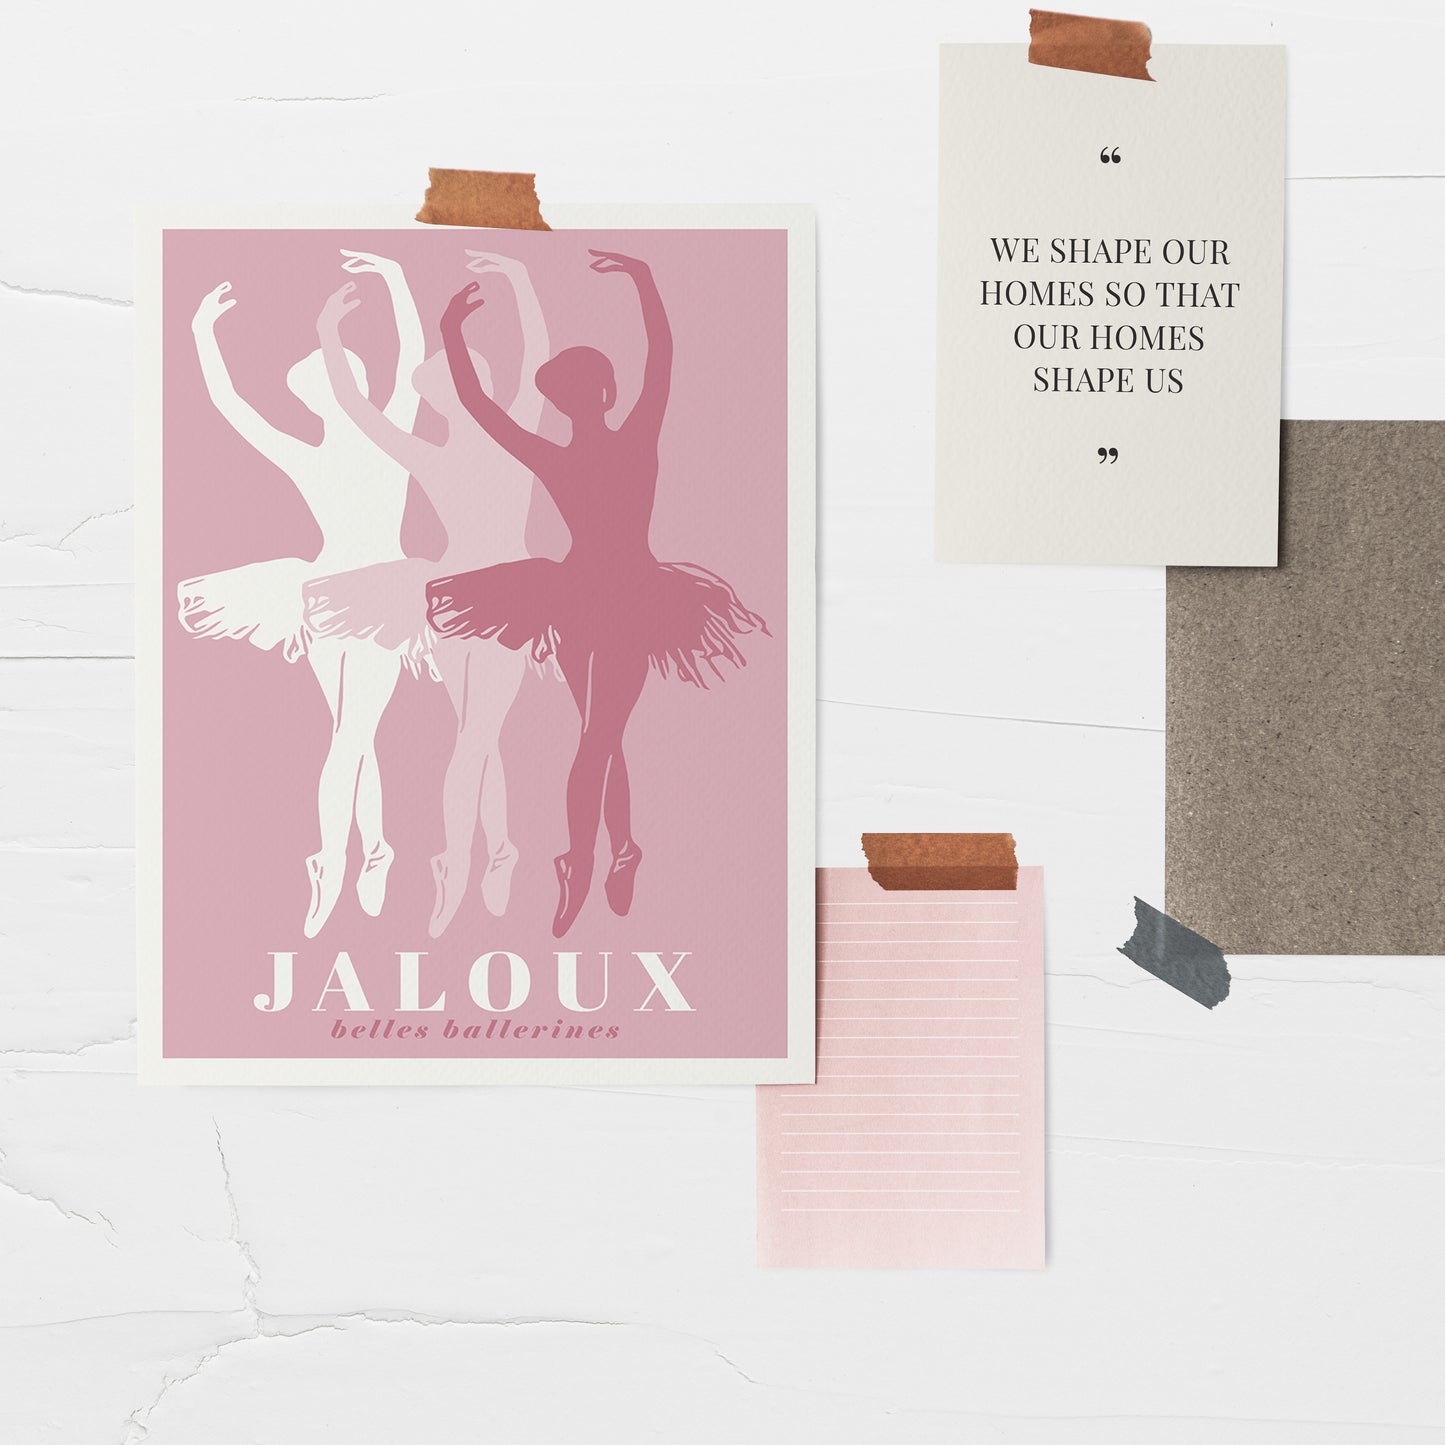 Jaloux Pink Ballet Poster